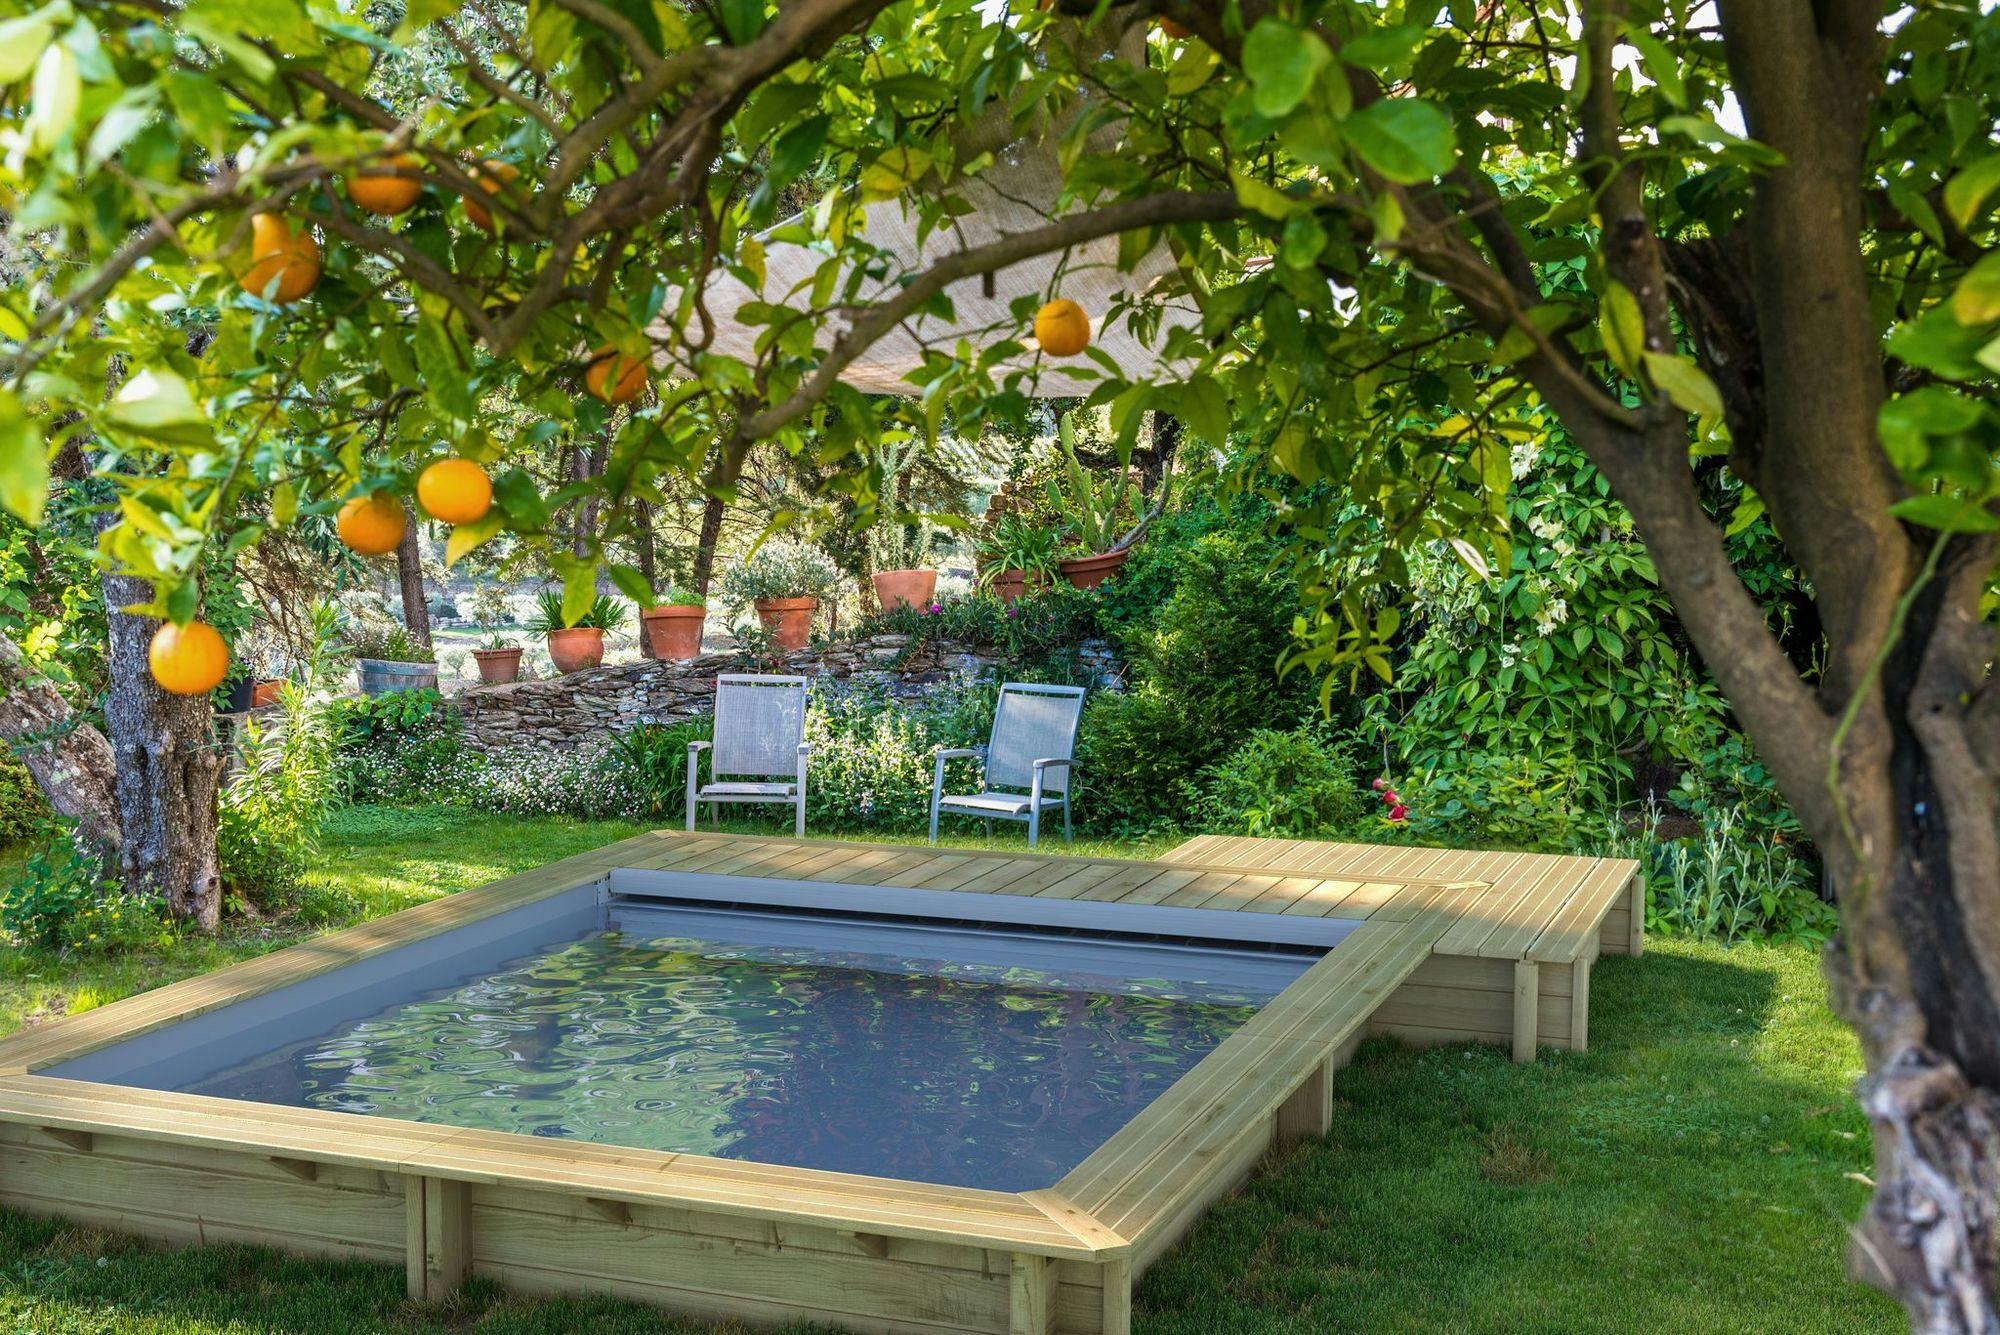 piscine hors sol rectangulaire en bois dans un jardin